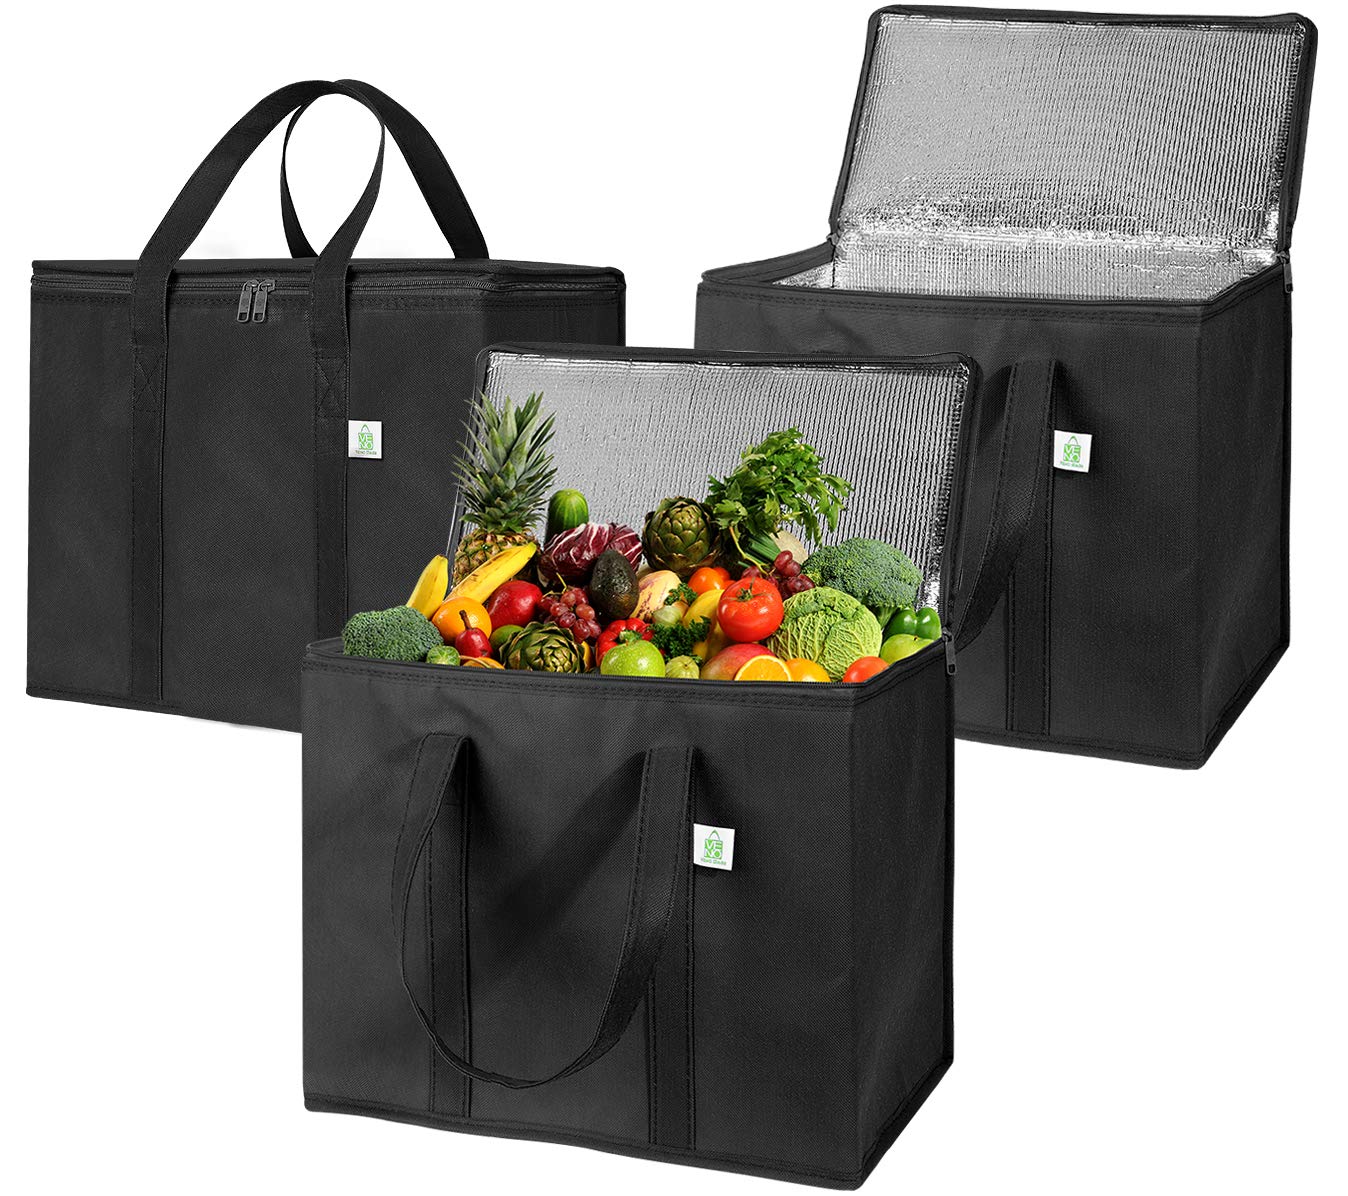 Veno Bag Reusable Grocery Shopping Bags, 3-Pack